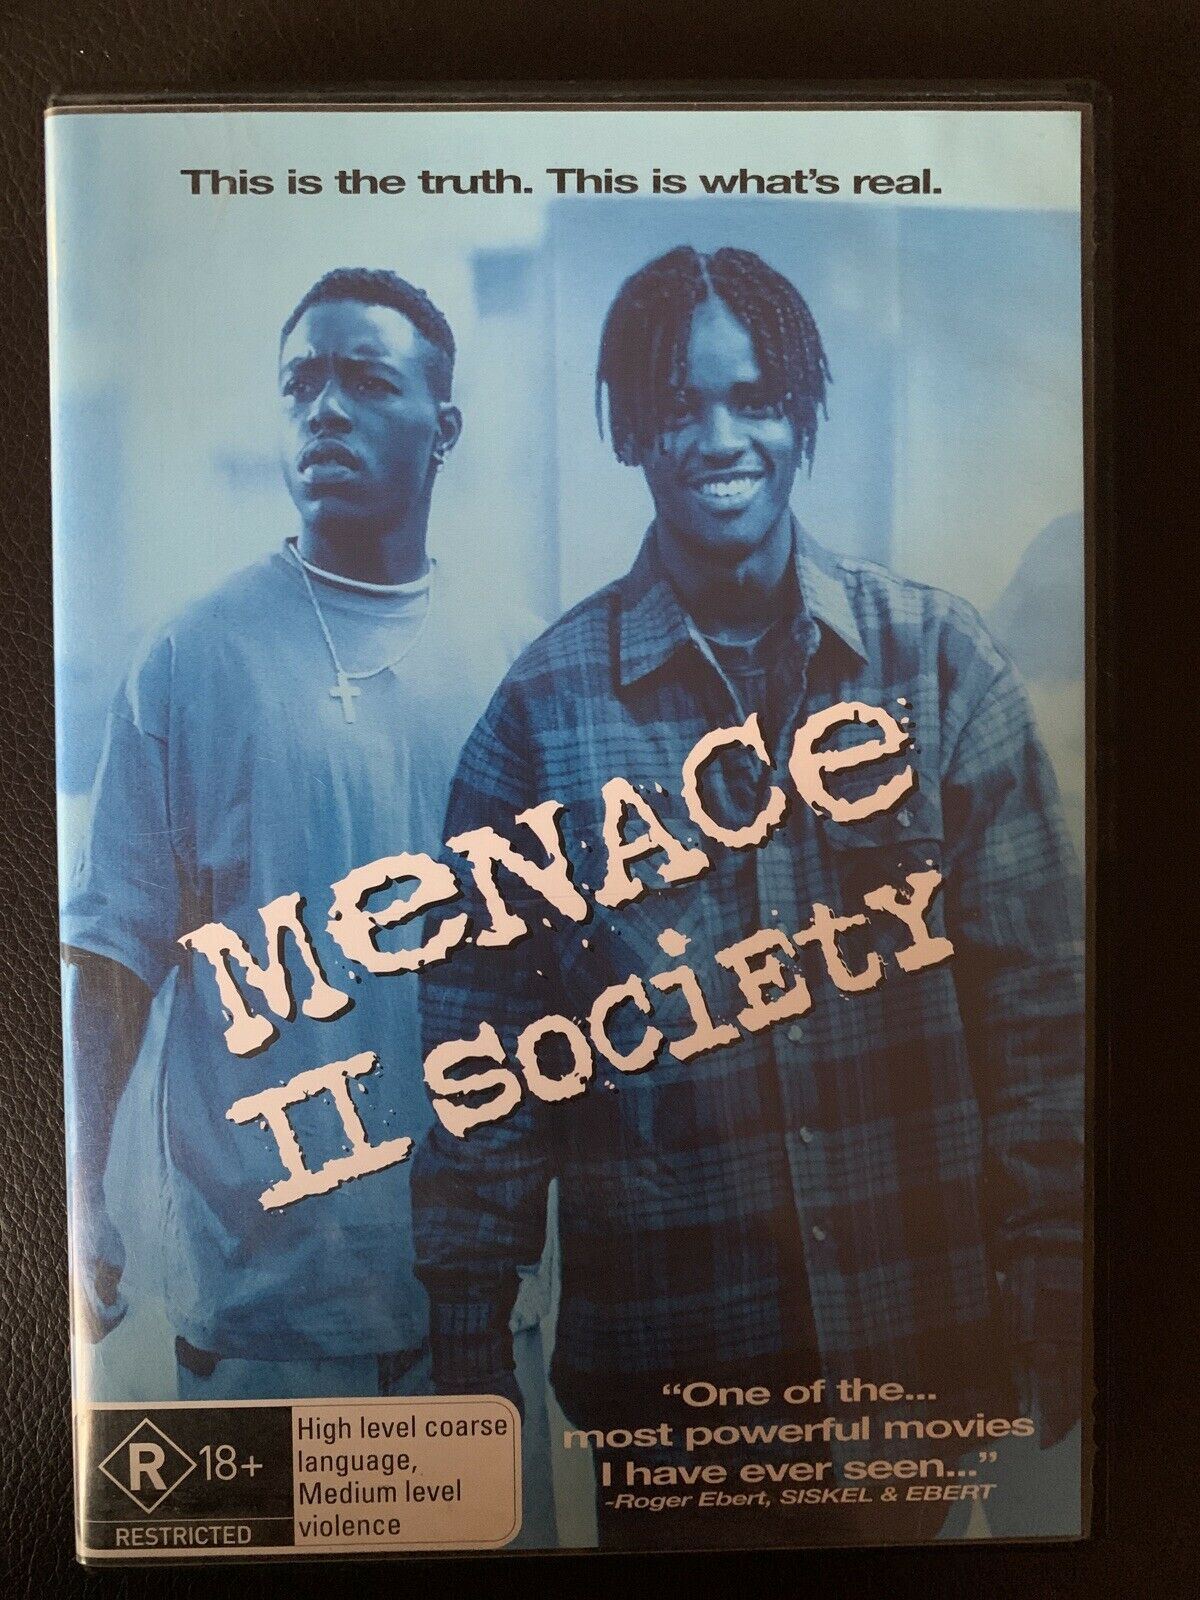 Menace II Society (DVD, 1993) Tyrin Turner, Jada Pinkett. Region 4